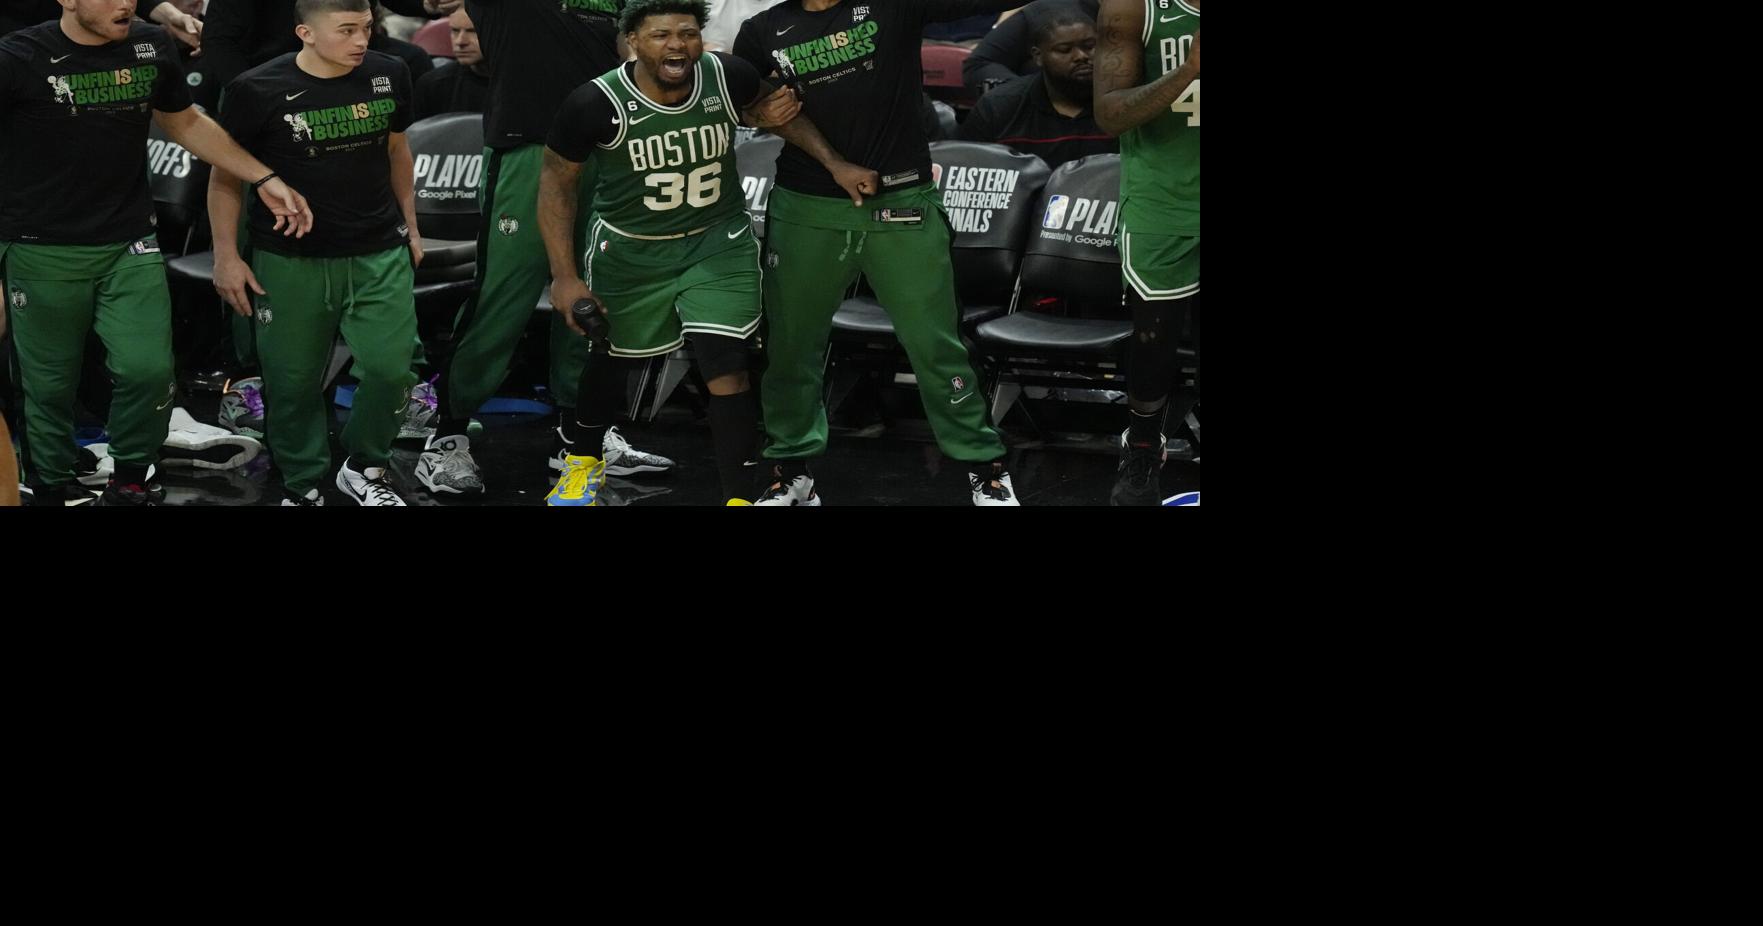 Heat's Erik Spoelstra relished going through Celtics after last